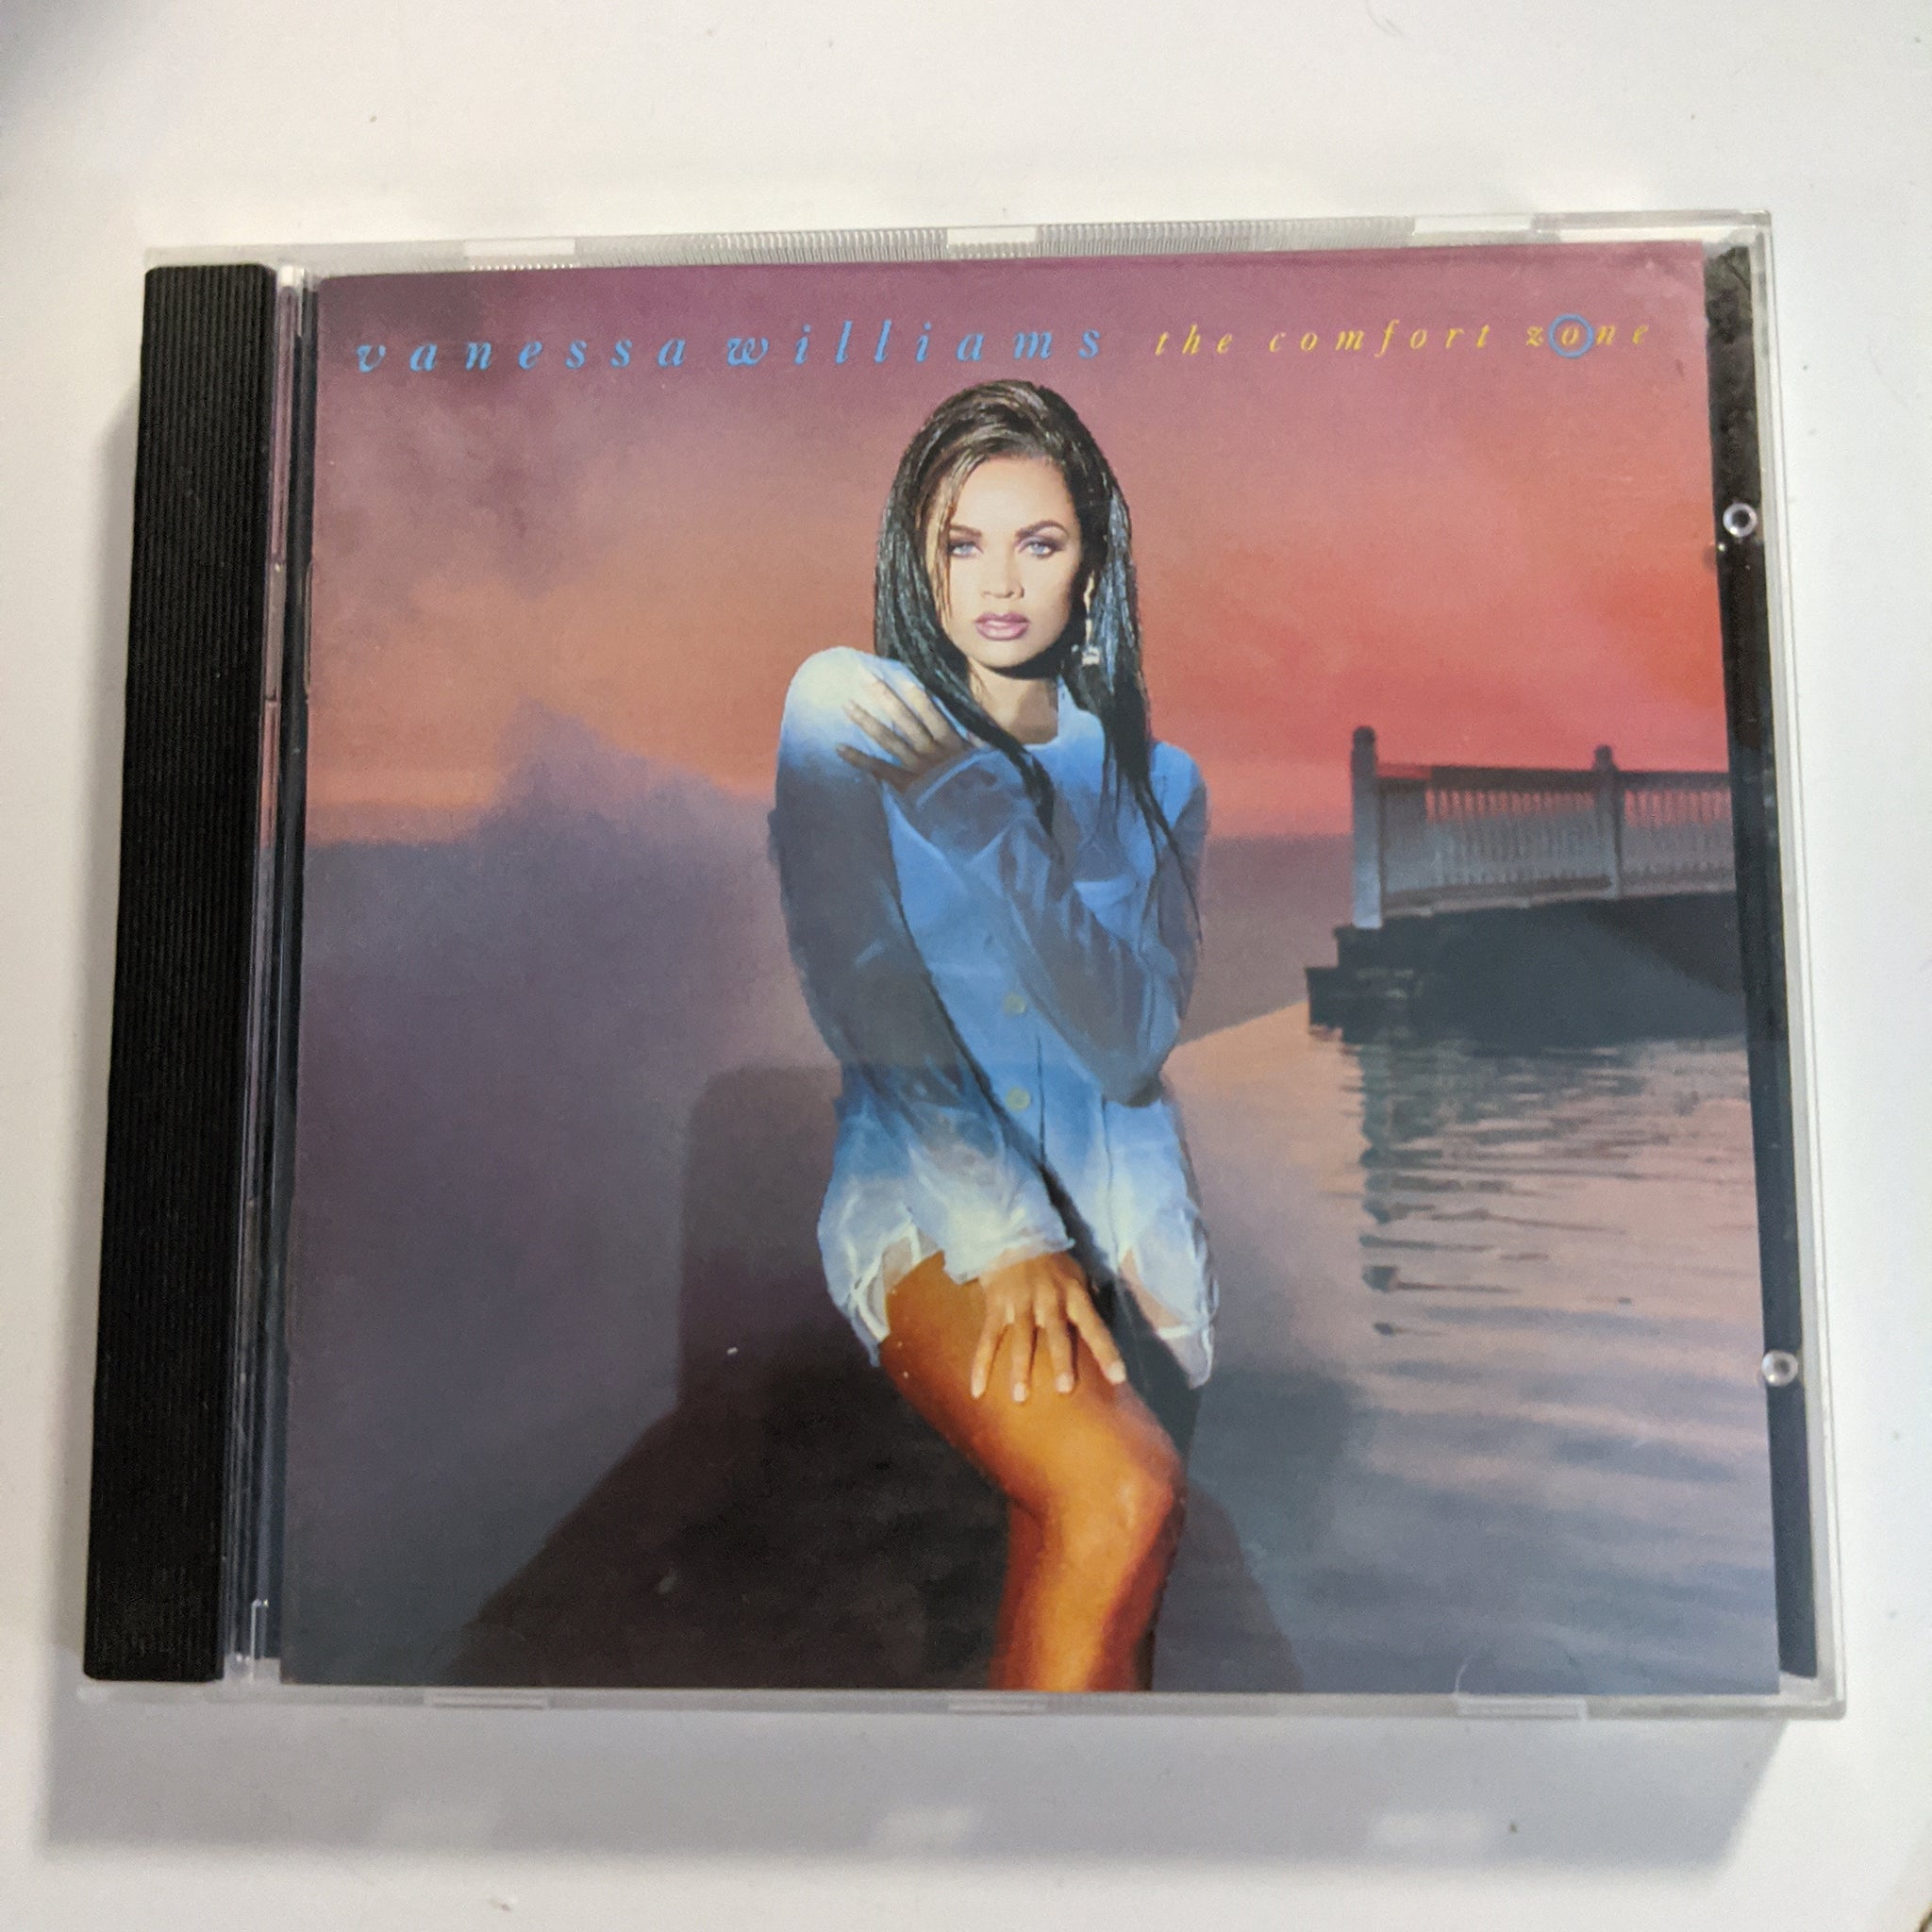 Vanessa Williams - The Comfort Zone - R&B Pop Music CD BMG Direct 14 t ...